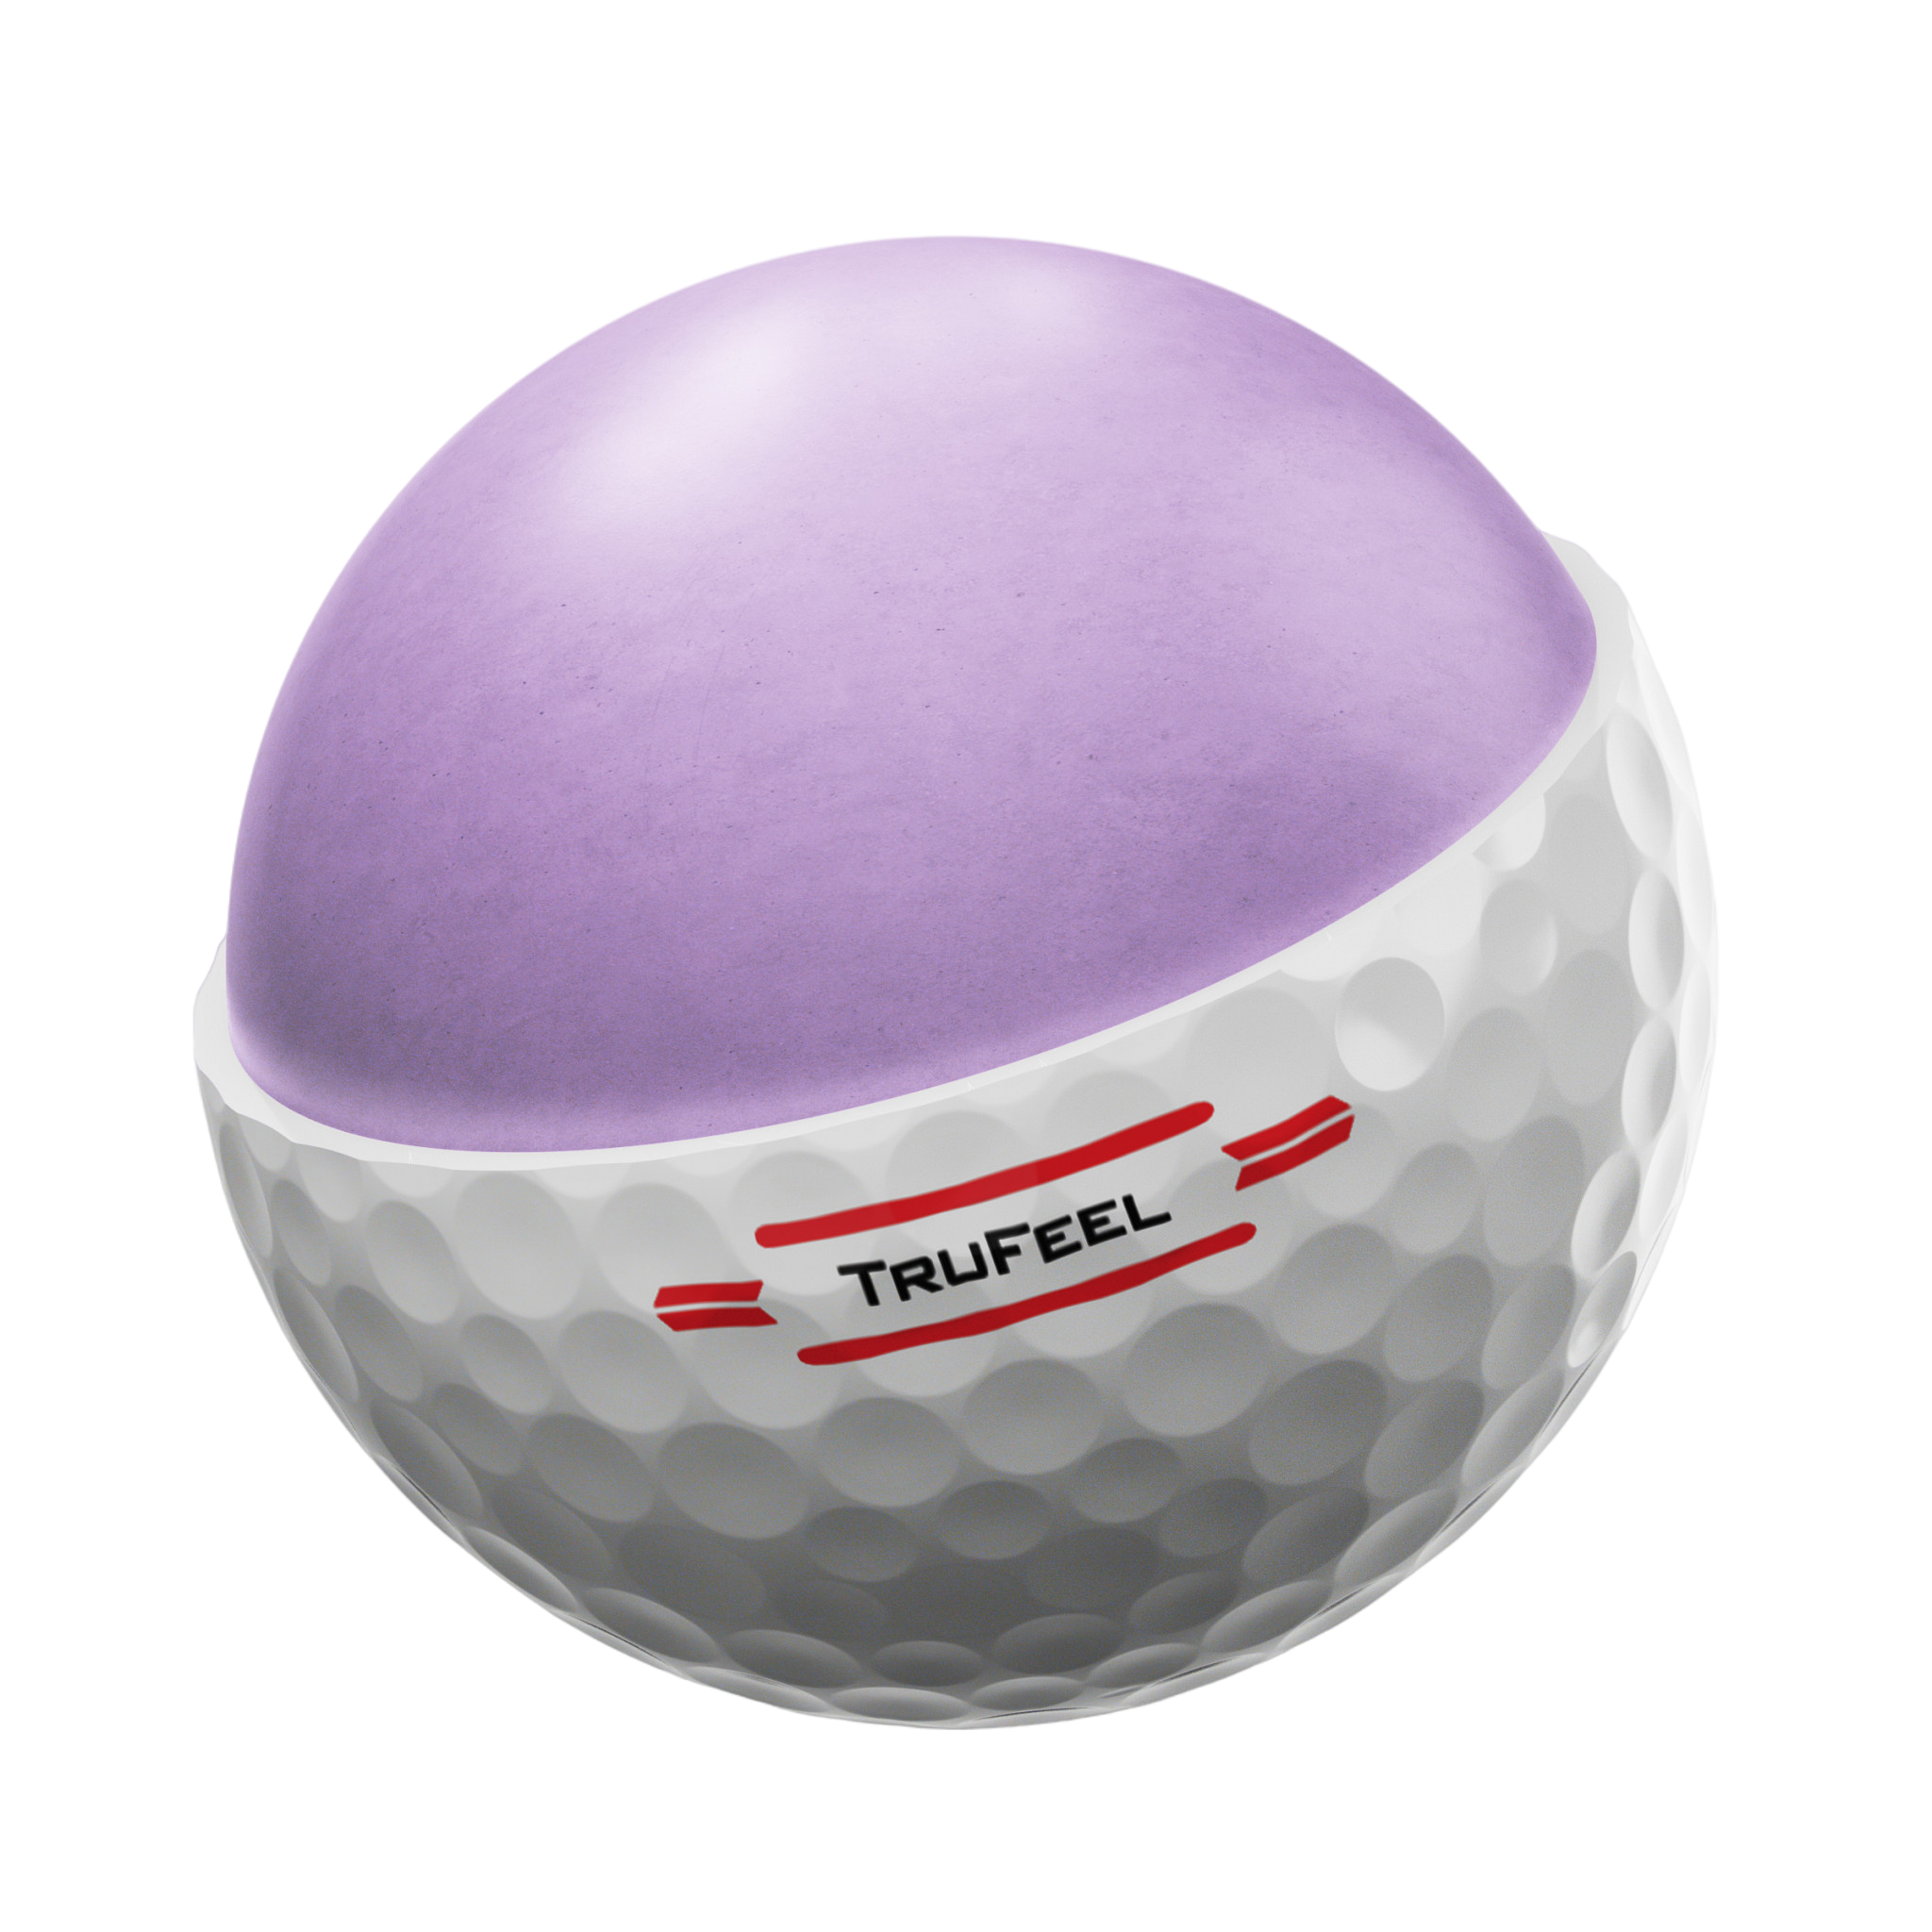 TruFeel 2022 Golf Balls